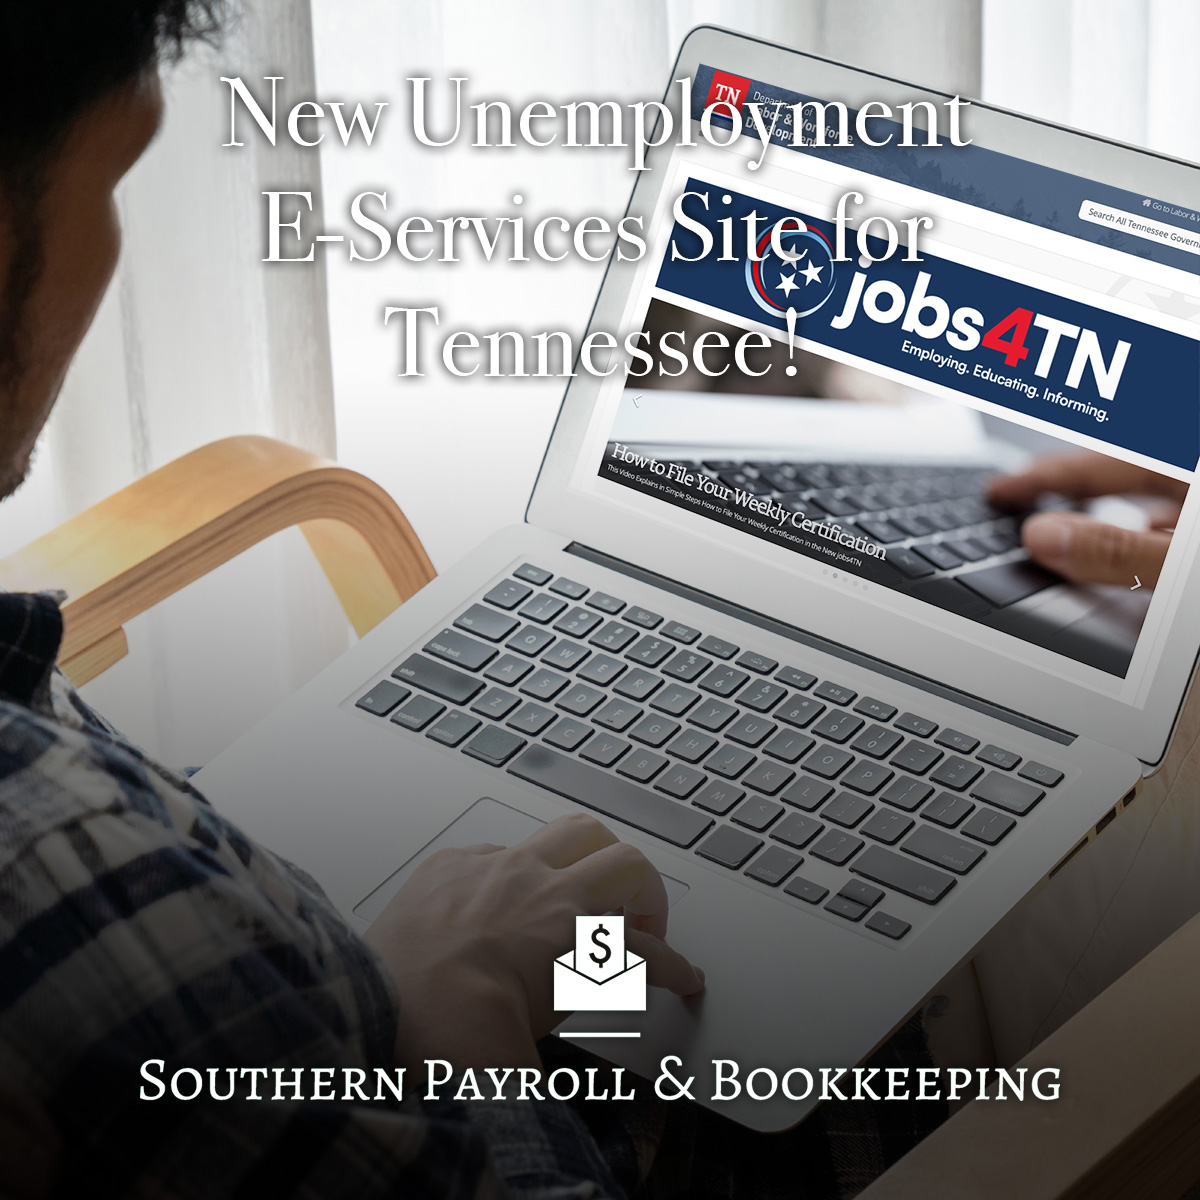 Modernizing Tennessee’s Unemployment E-Services